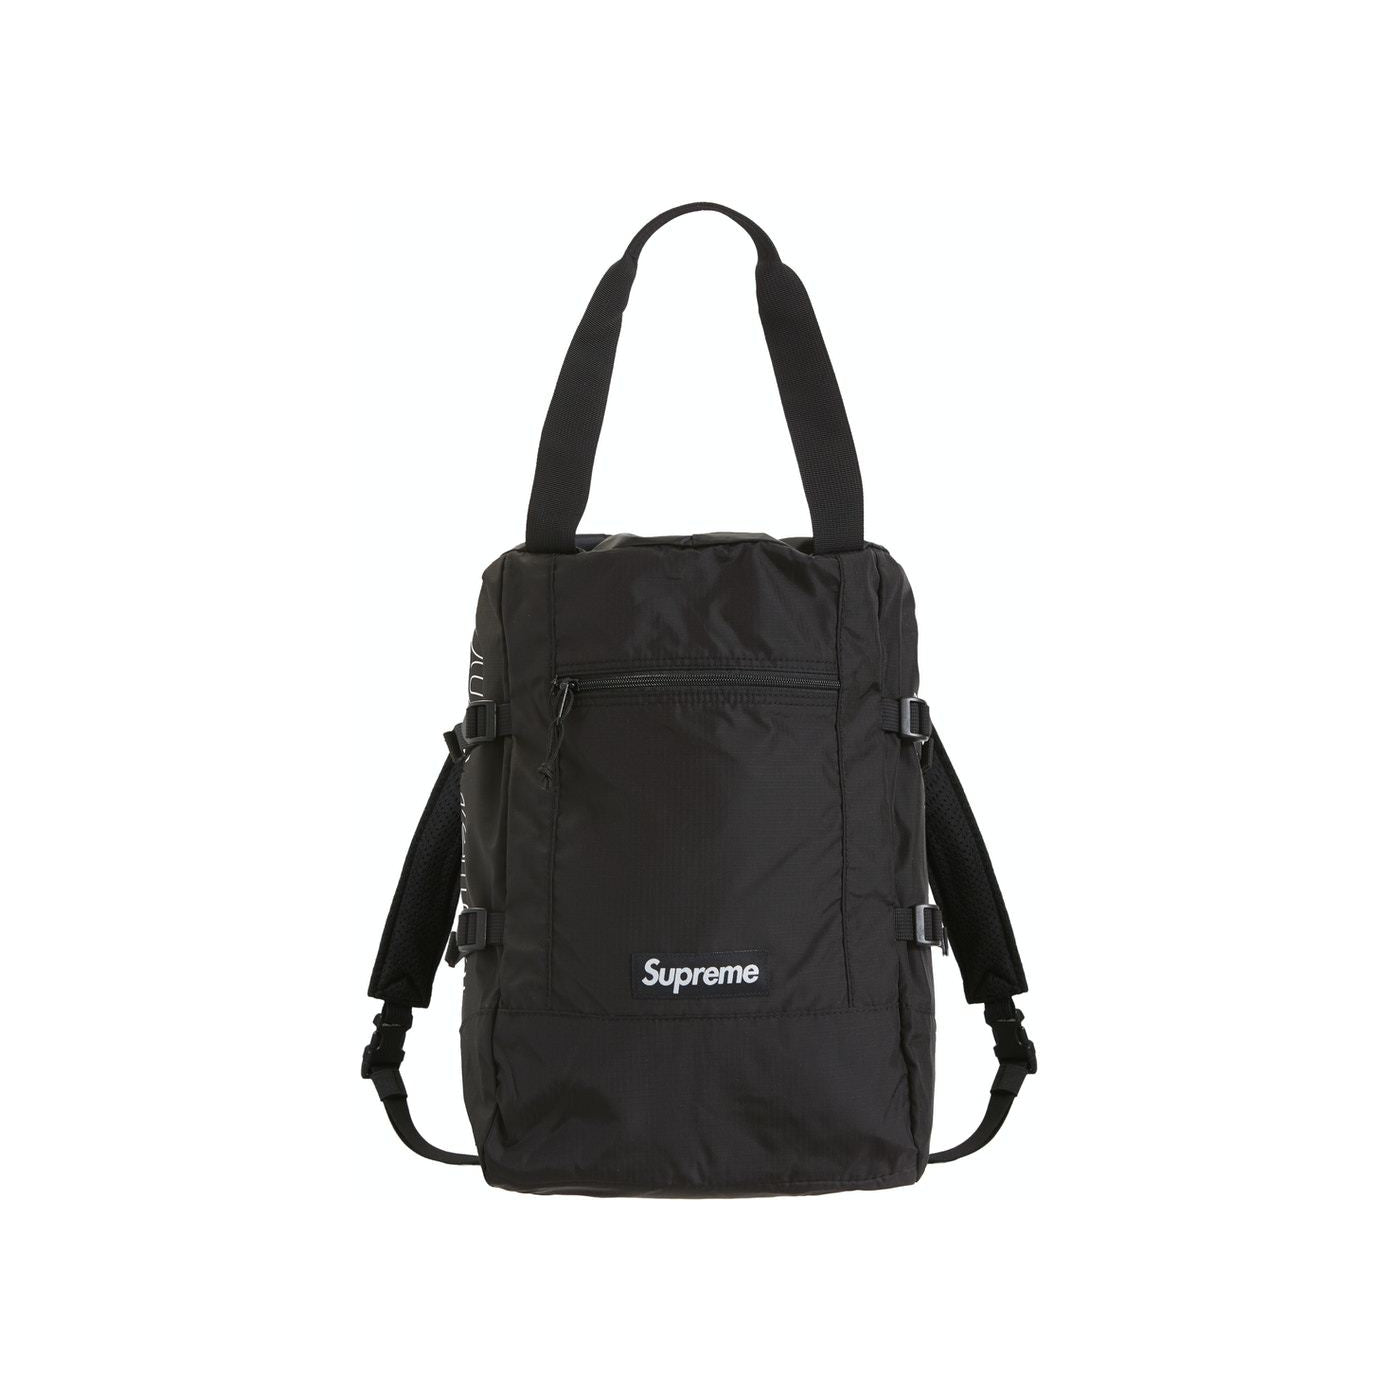 Supreme Tote Backpack - Black - Centrall Online